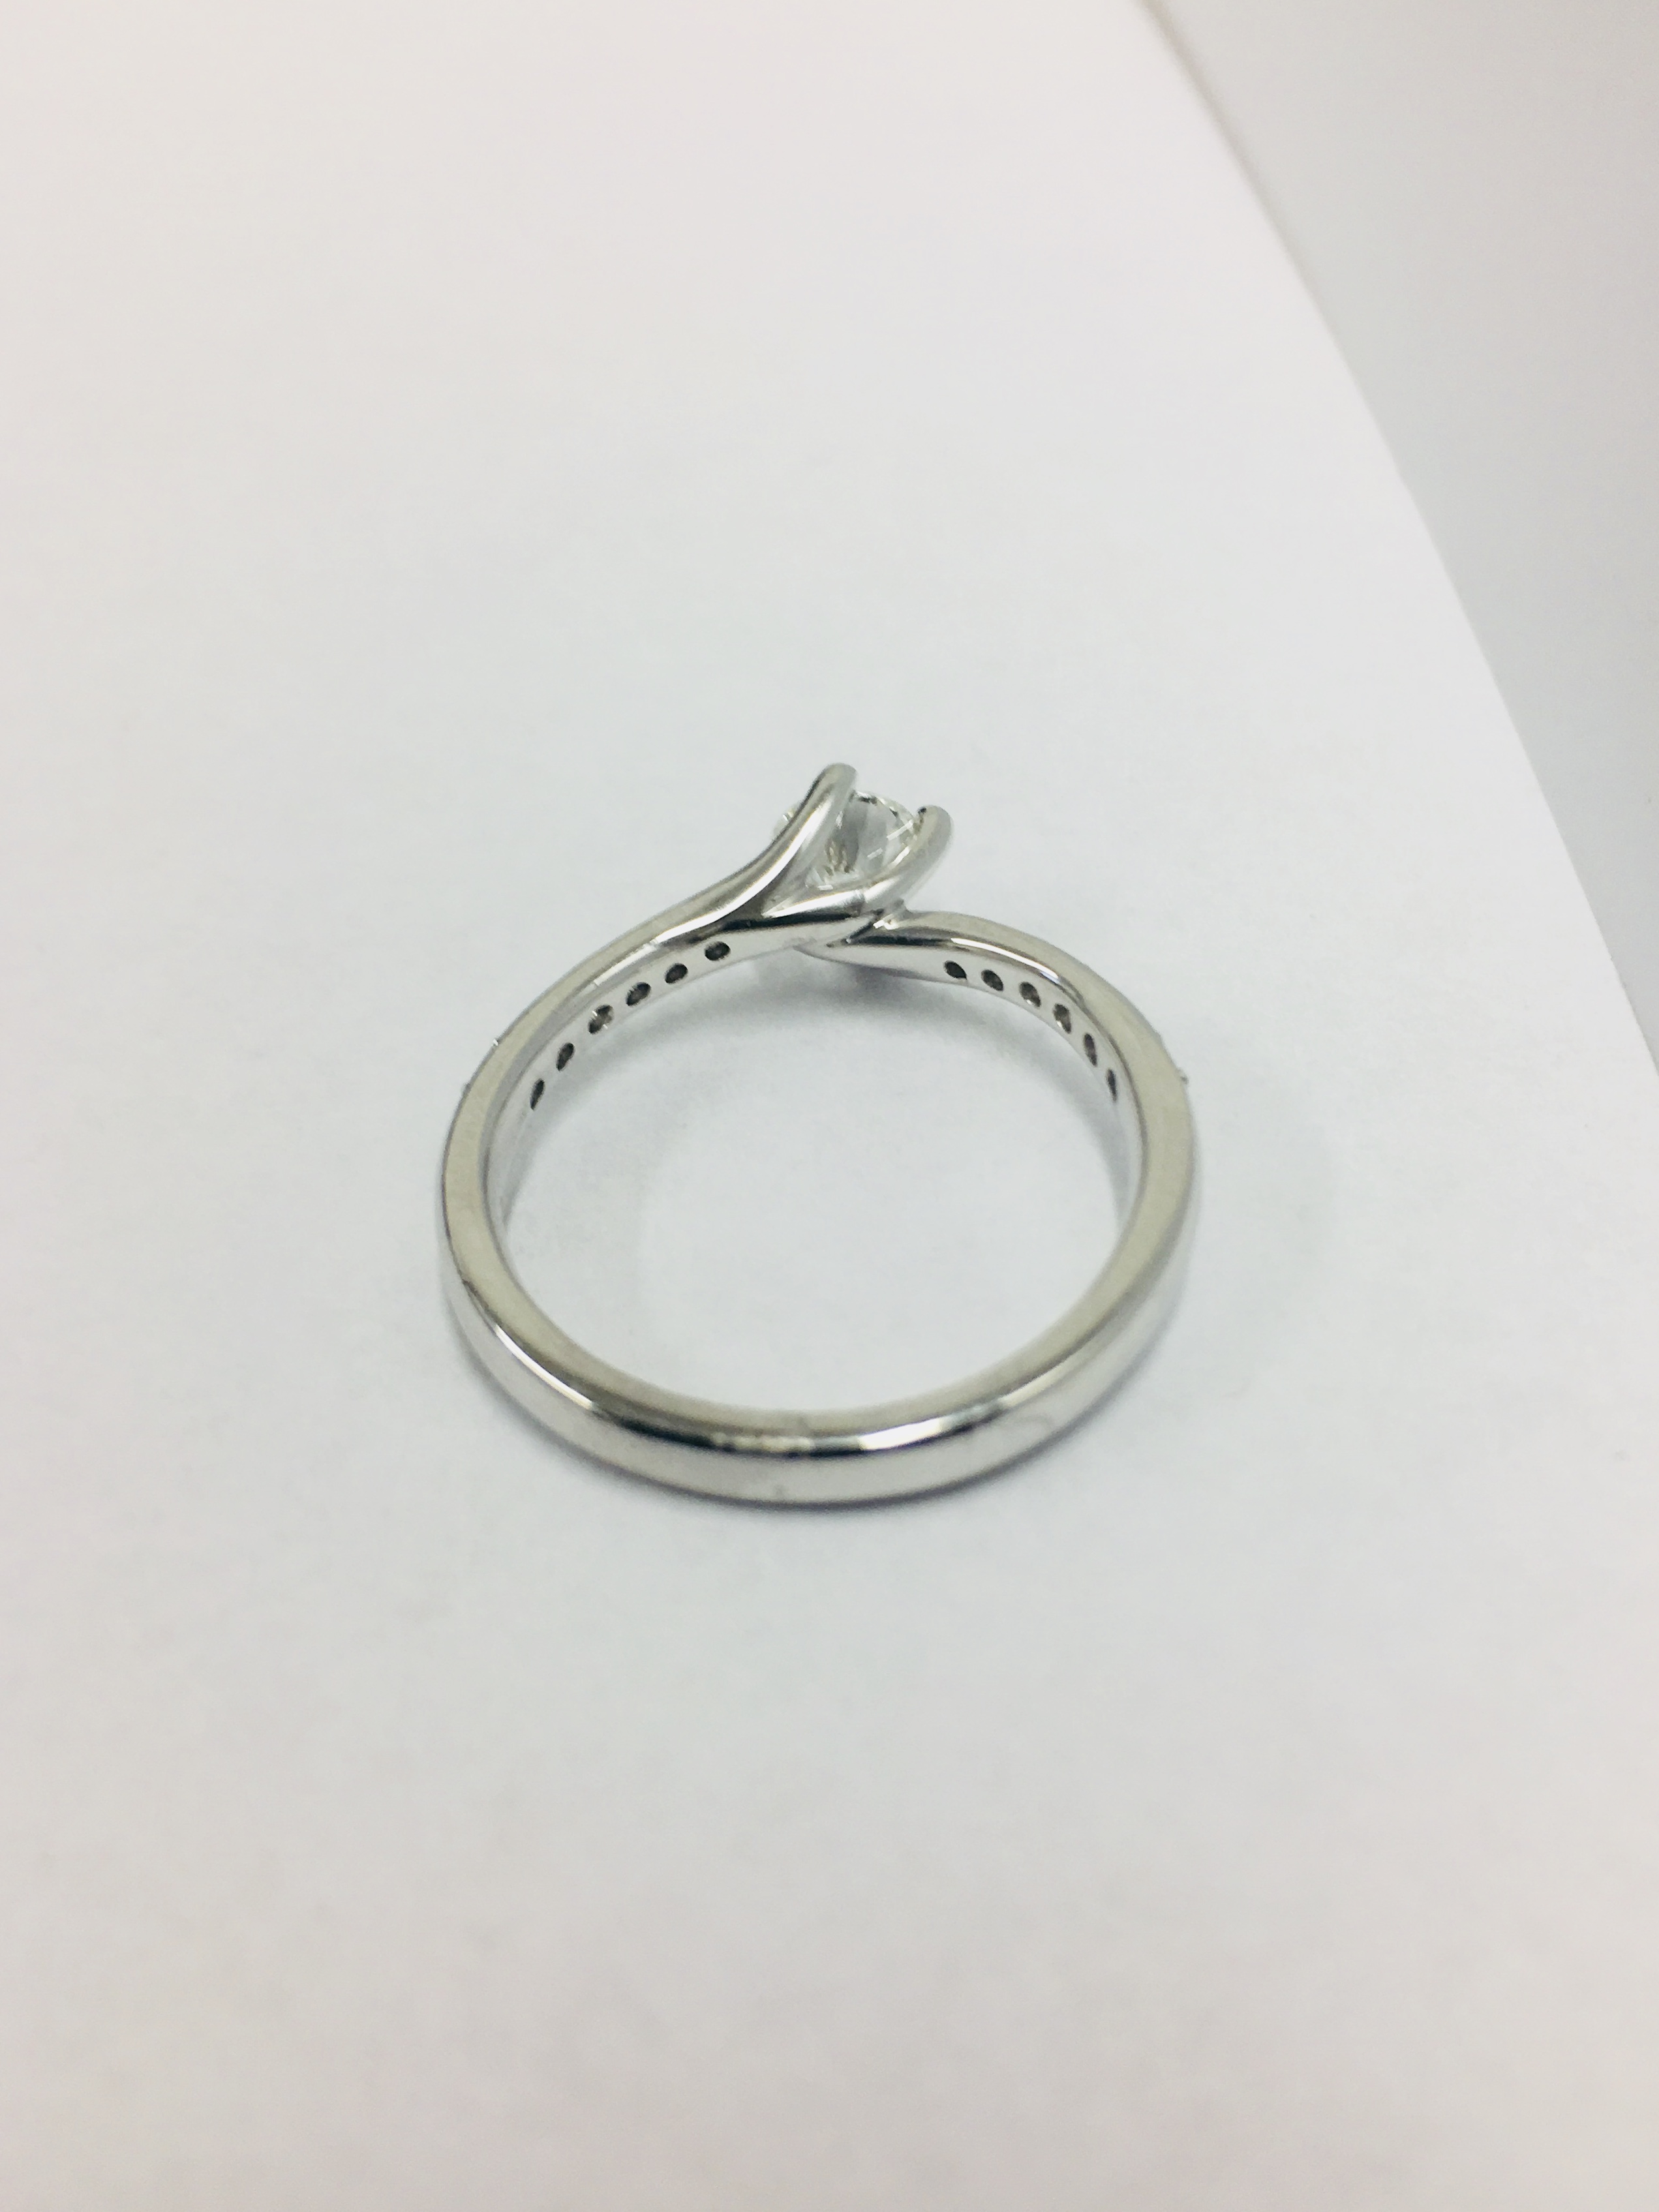 Platinum Damond Solitaire Ring, - Image 4 of 6